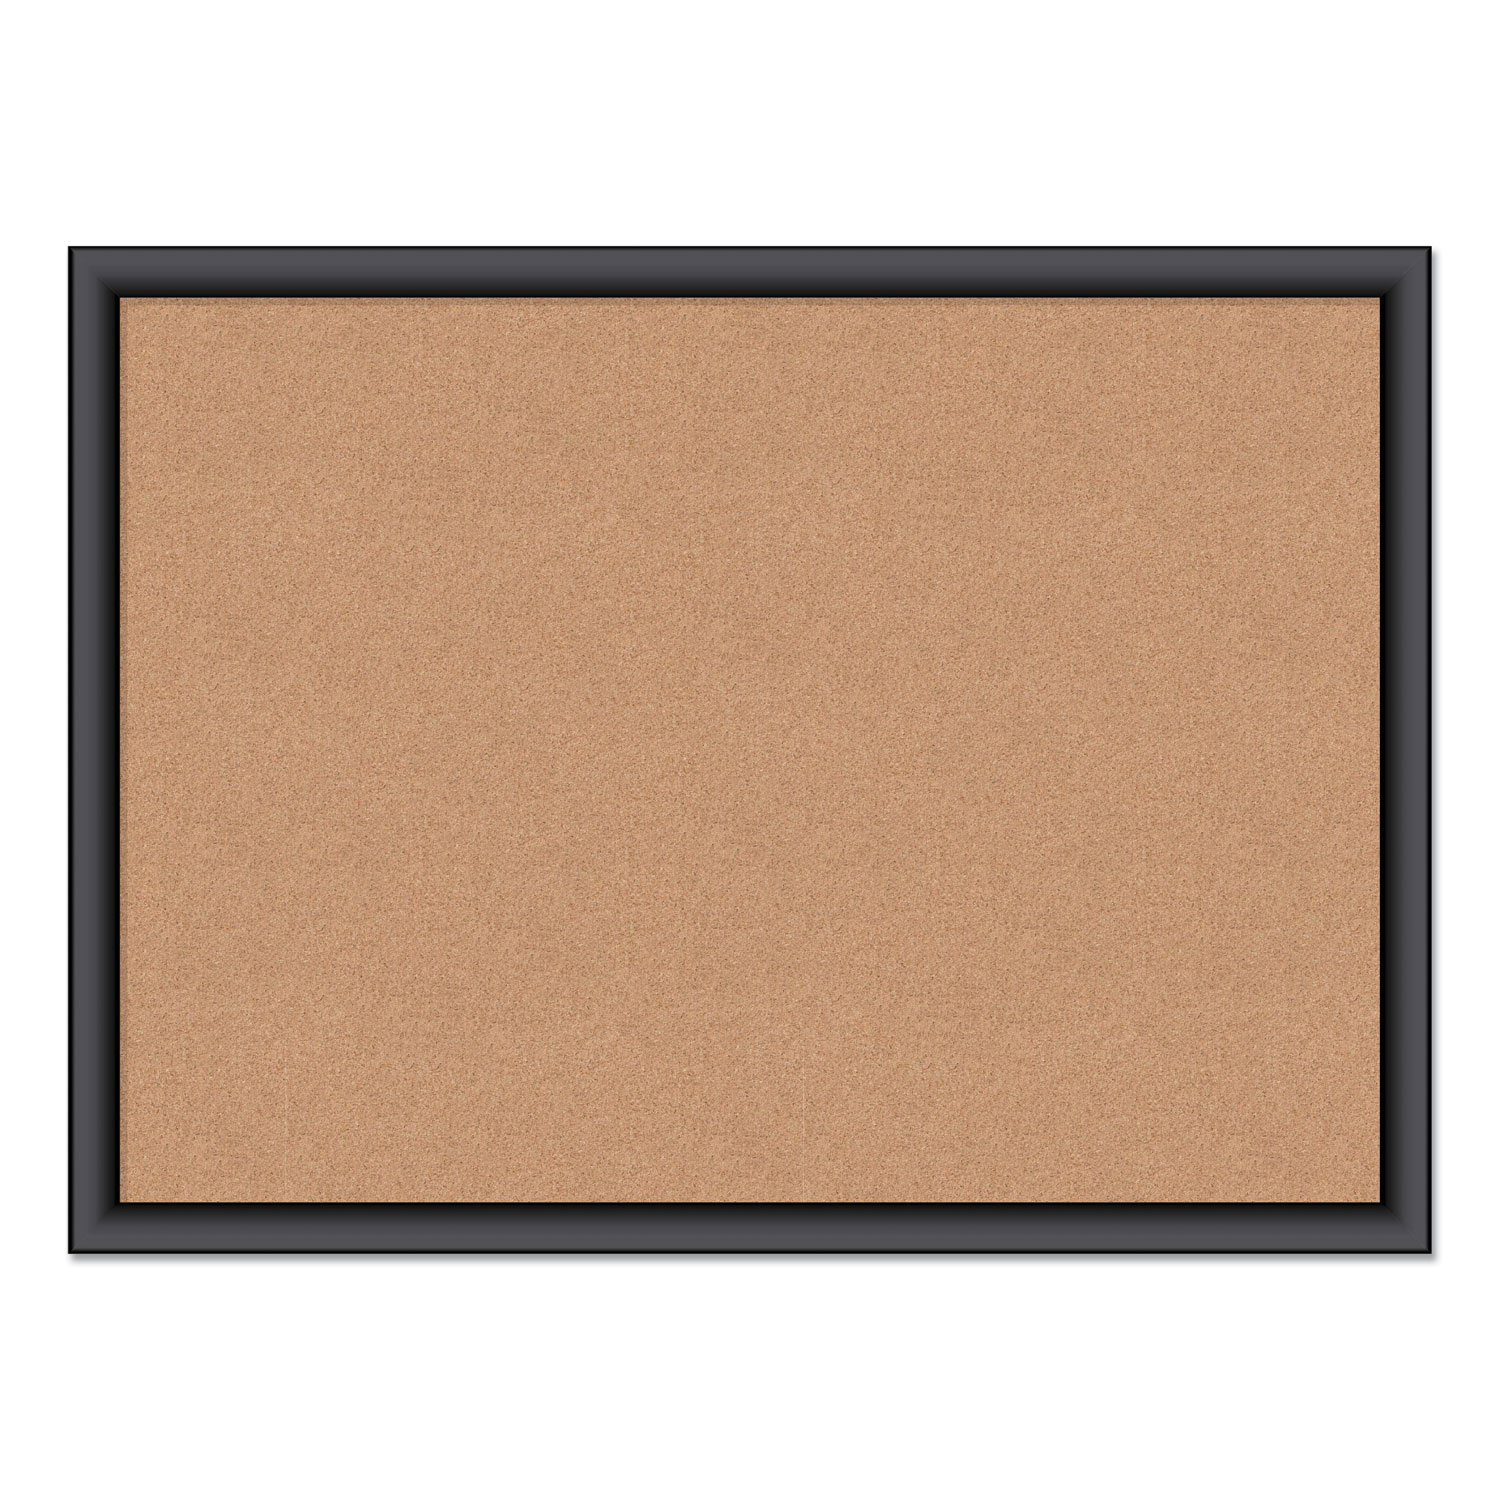  U Brands 026U0001 Cork Bulletin Board, 24 x 18, Natural Surface, Black Frame (UBR026U0001) 